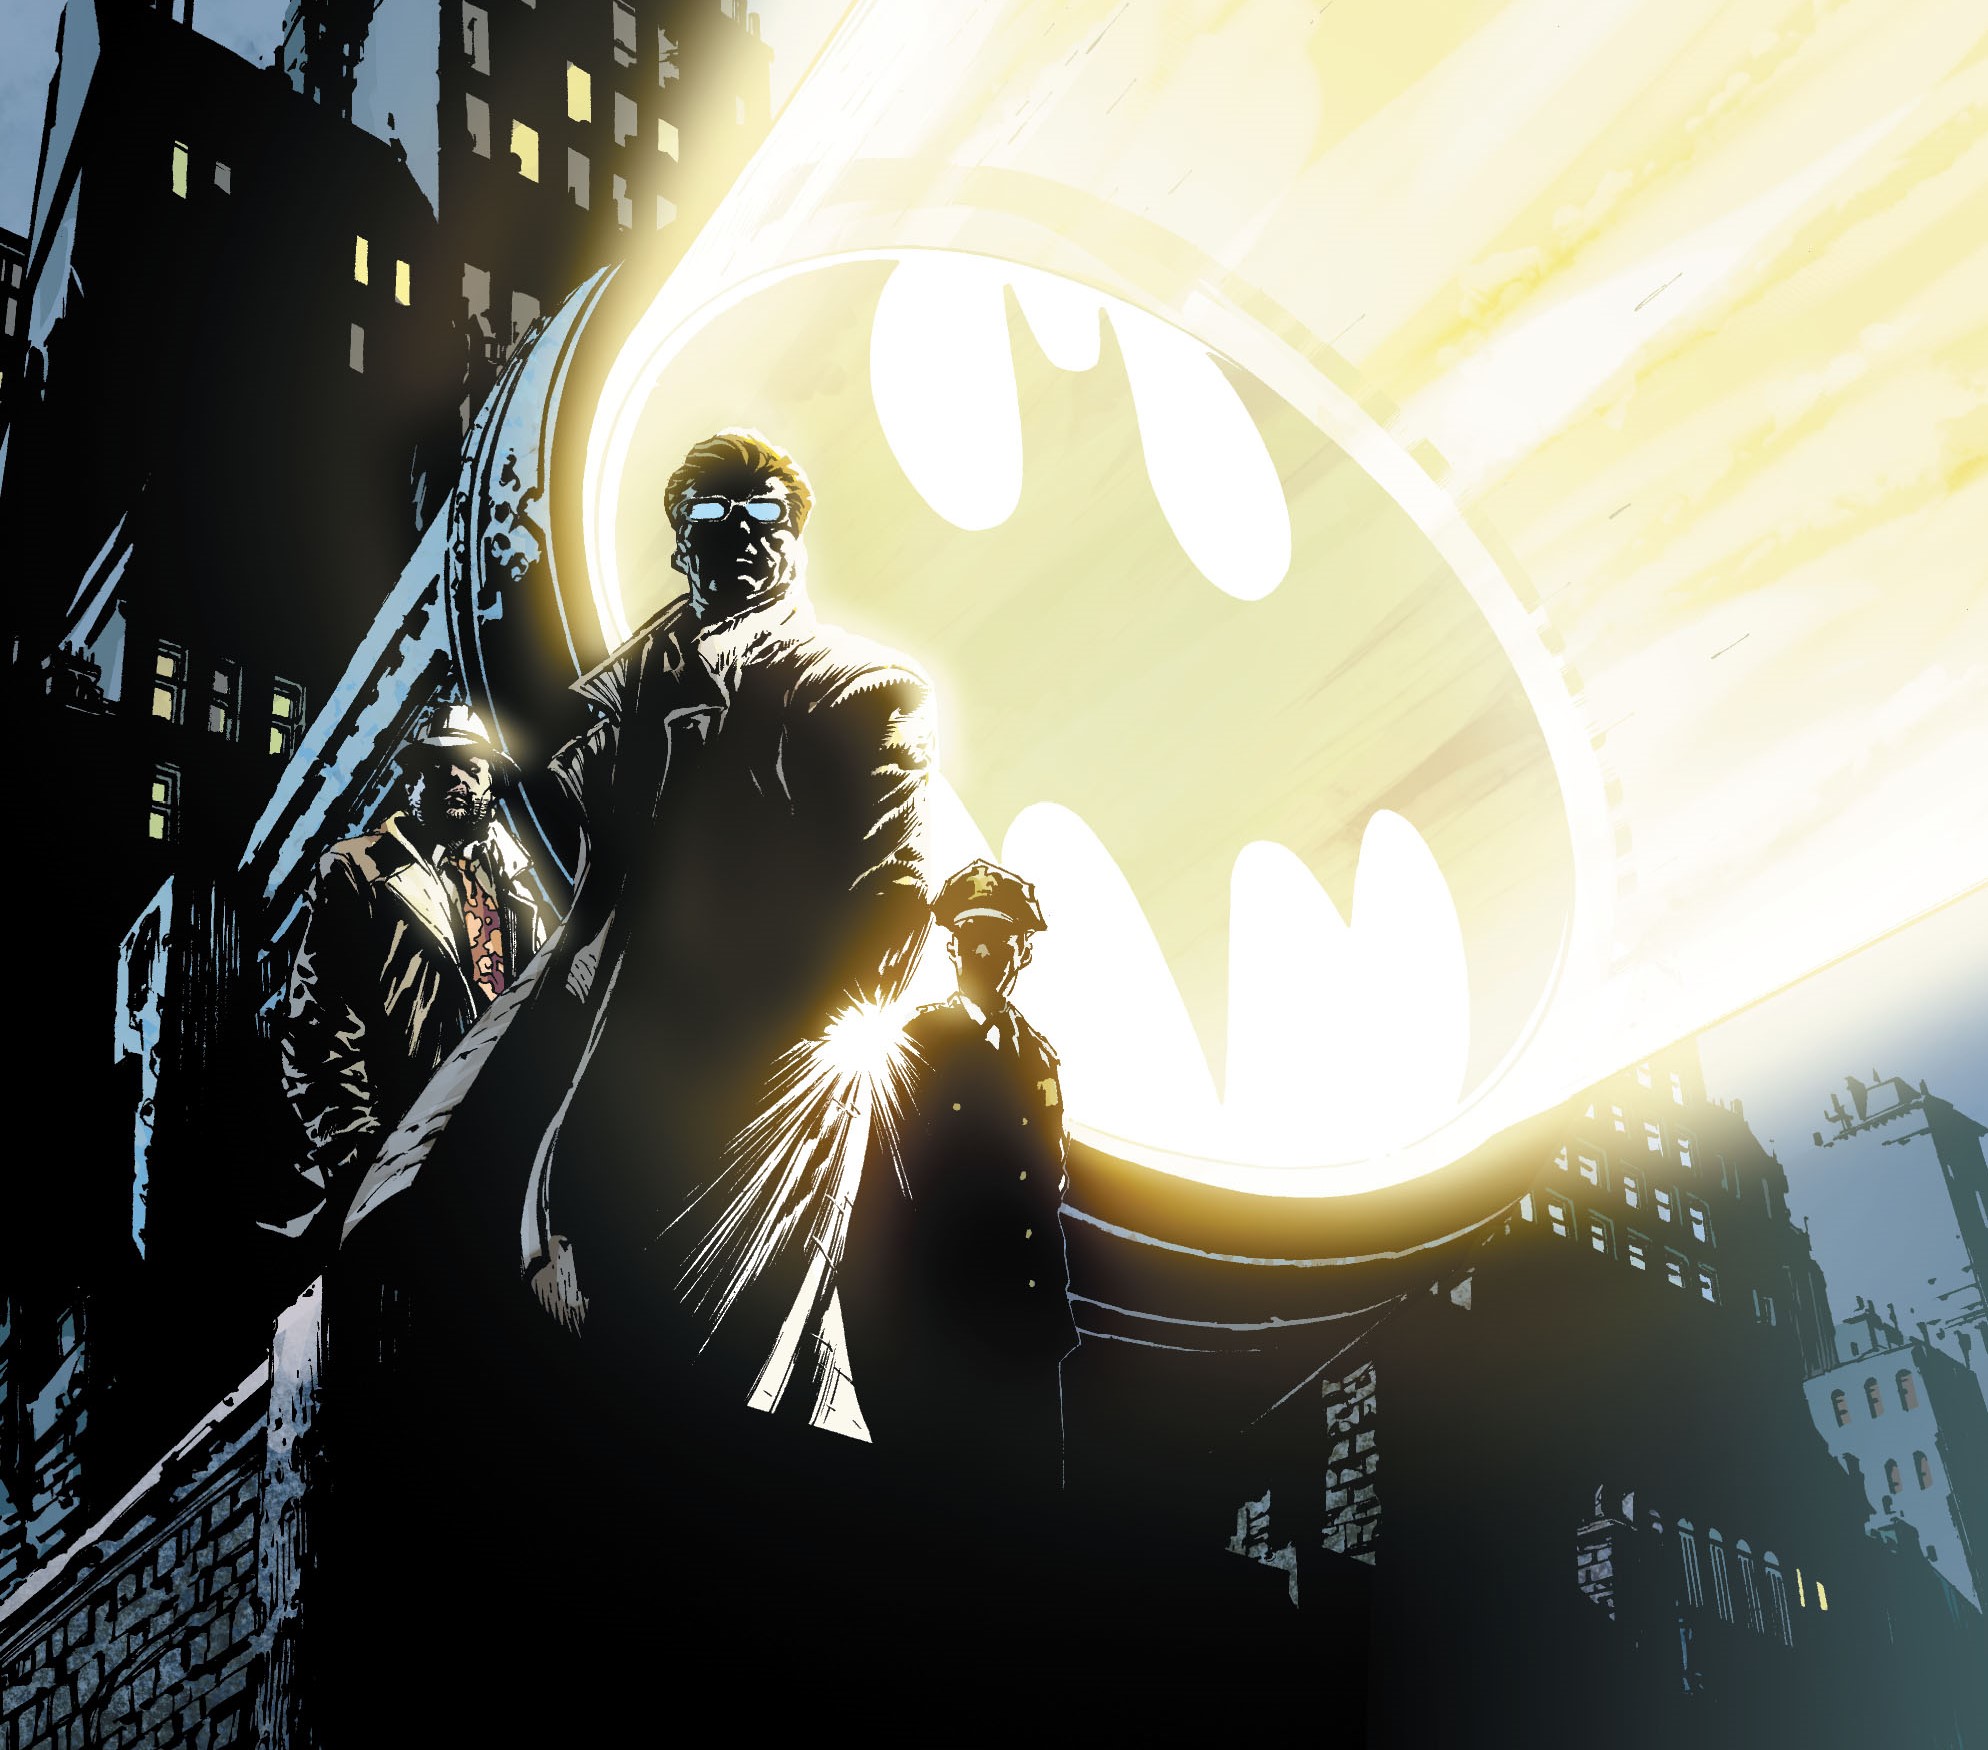 Bat Signal Lights Up New Images From 'Batman v Superman: Dawn Of Justice